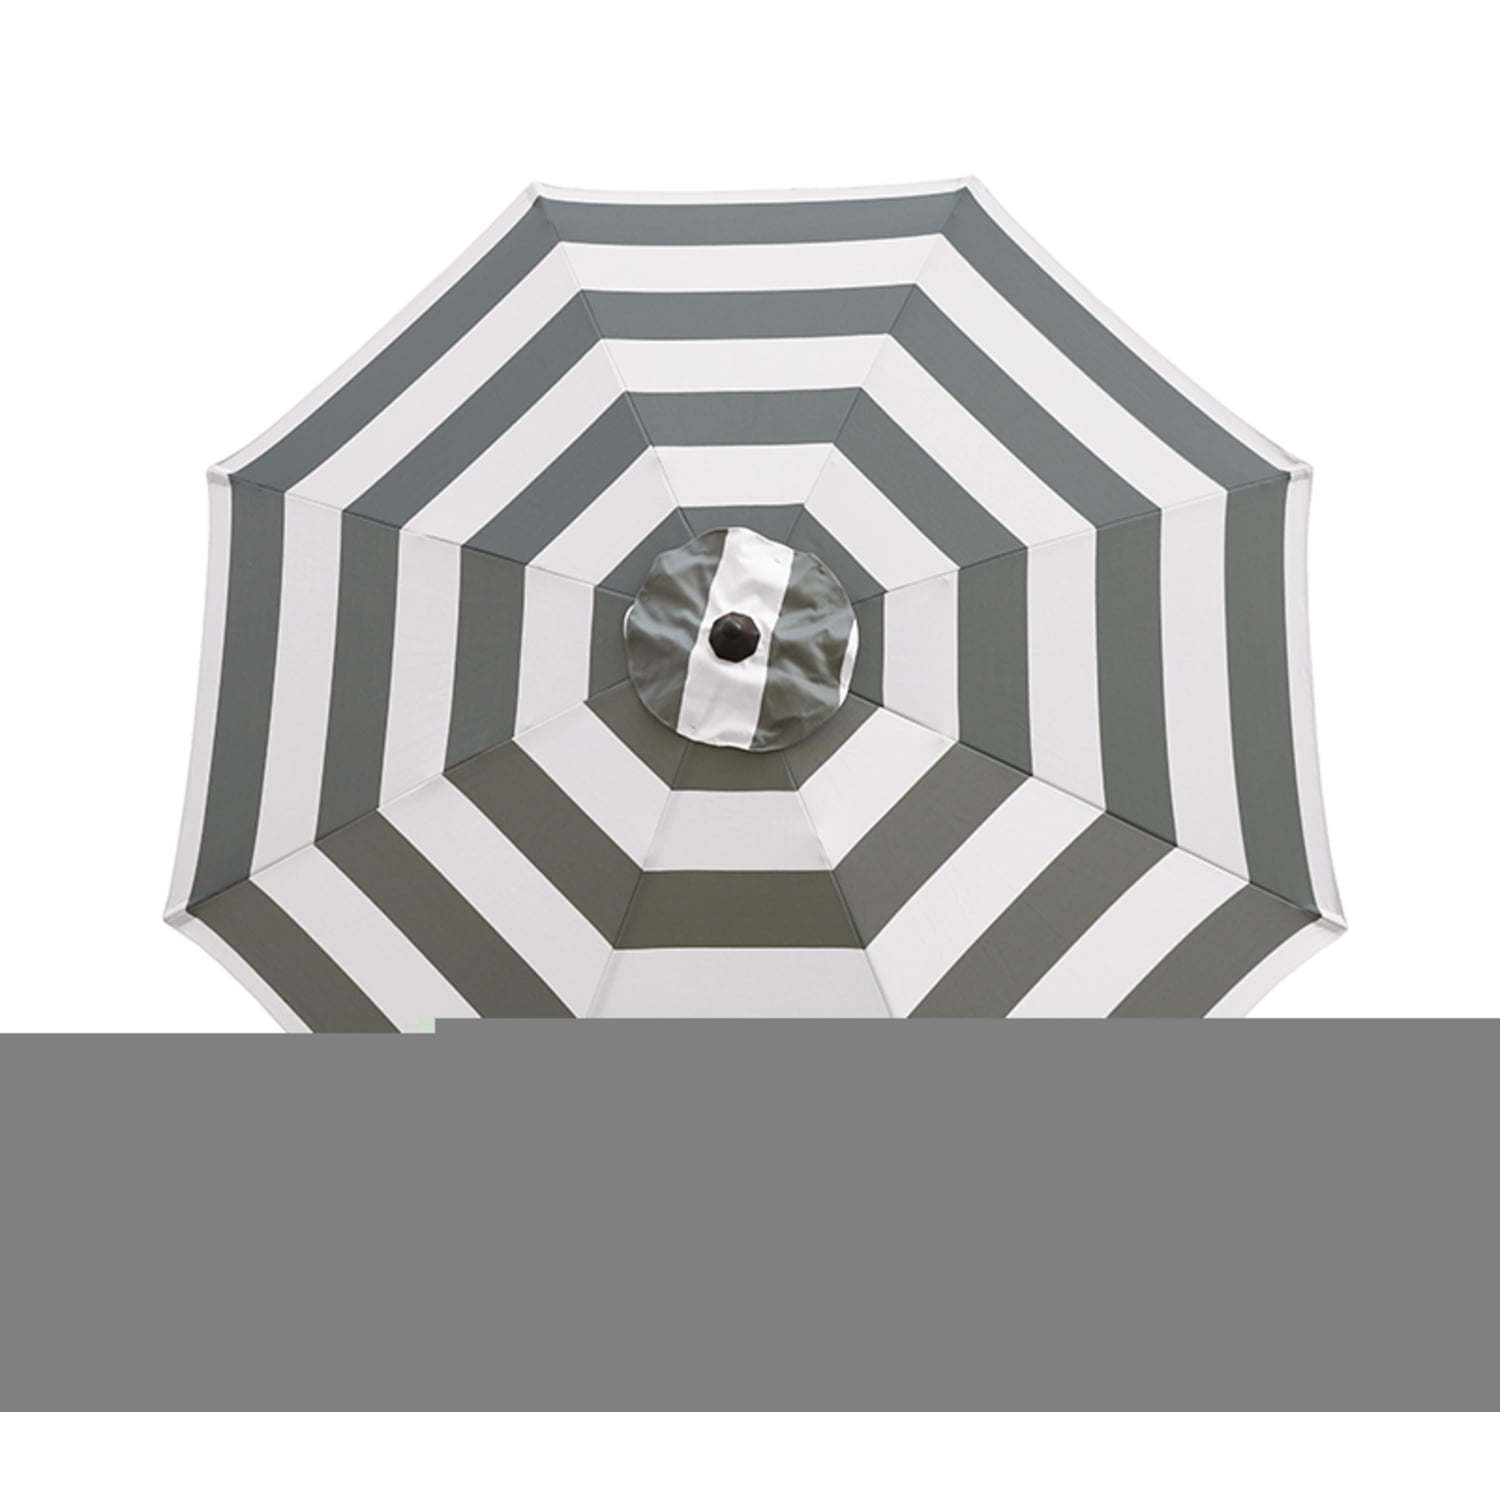 Picture of Living Accents 8014985 9 ft. Tiltable Gray Stripe Market Umbrella